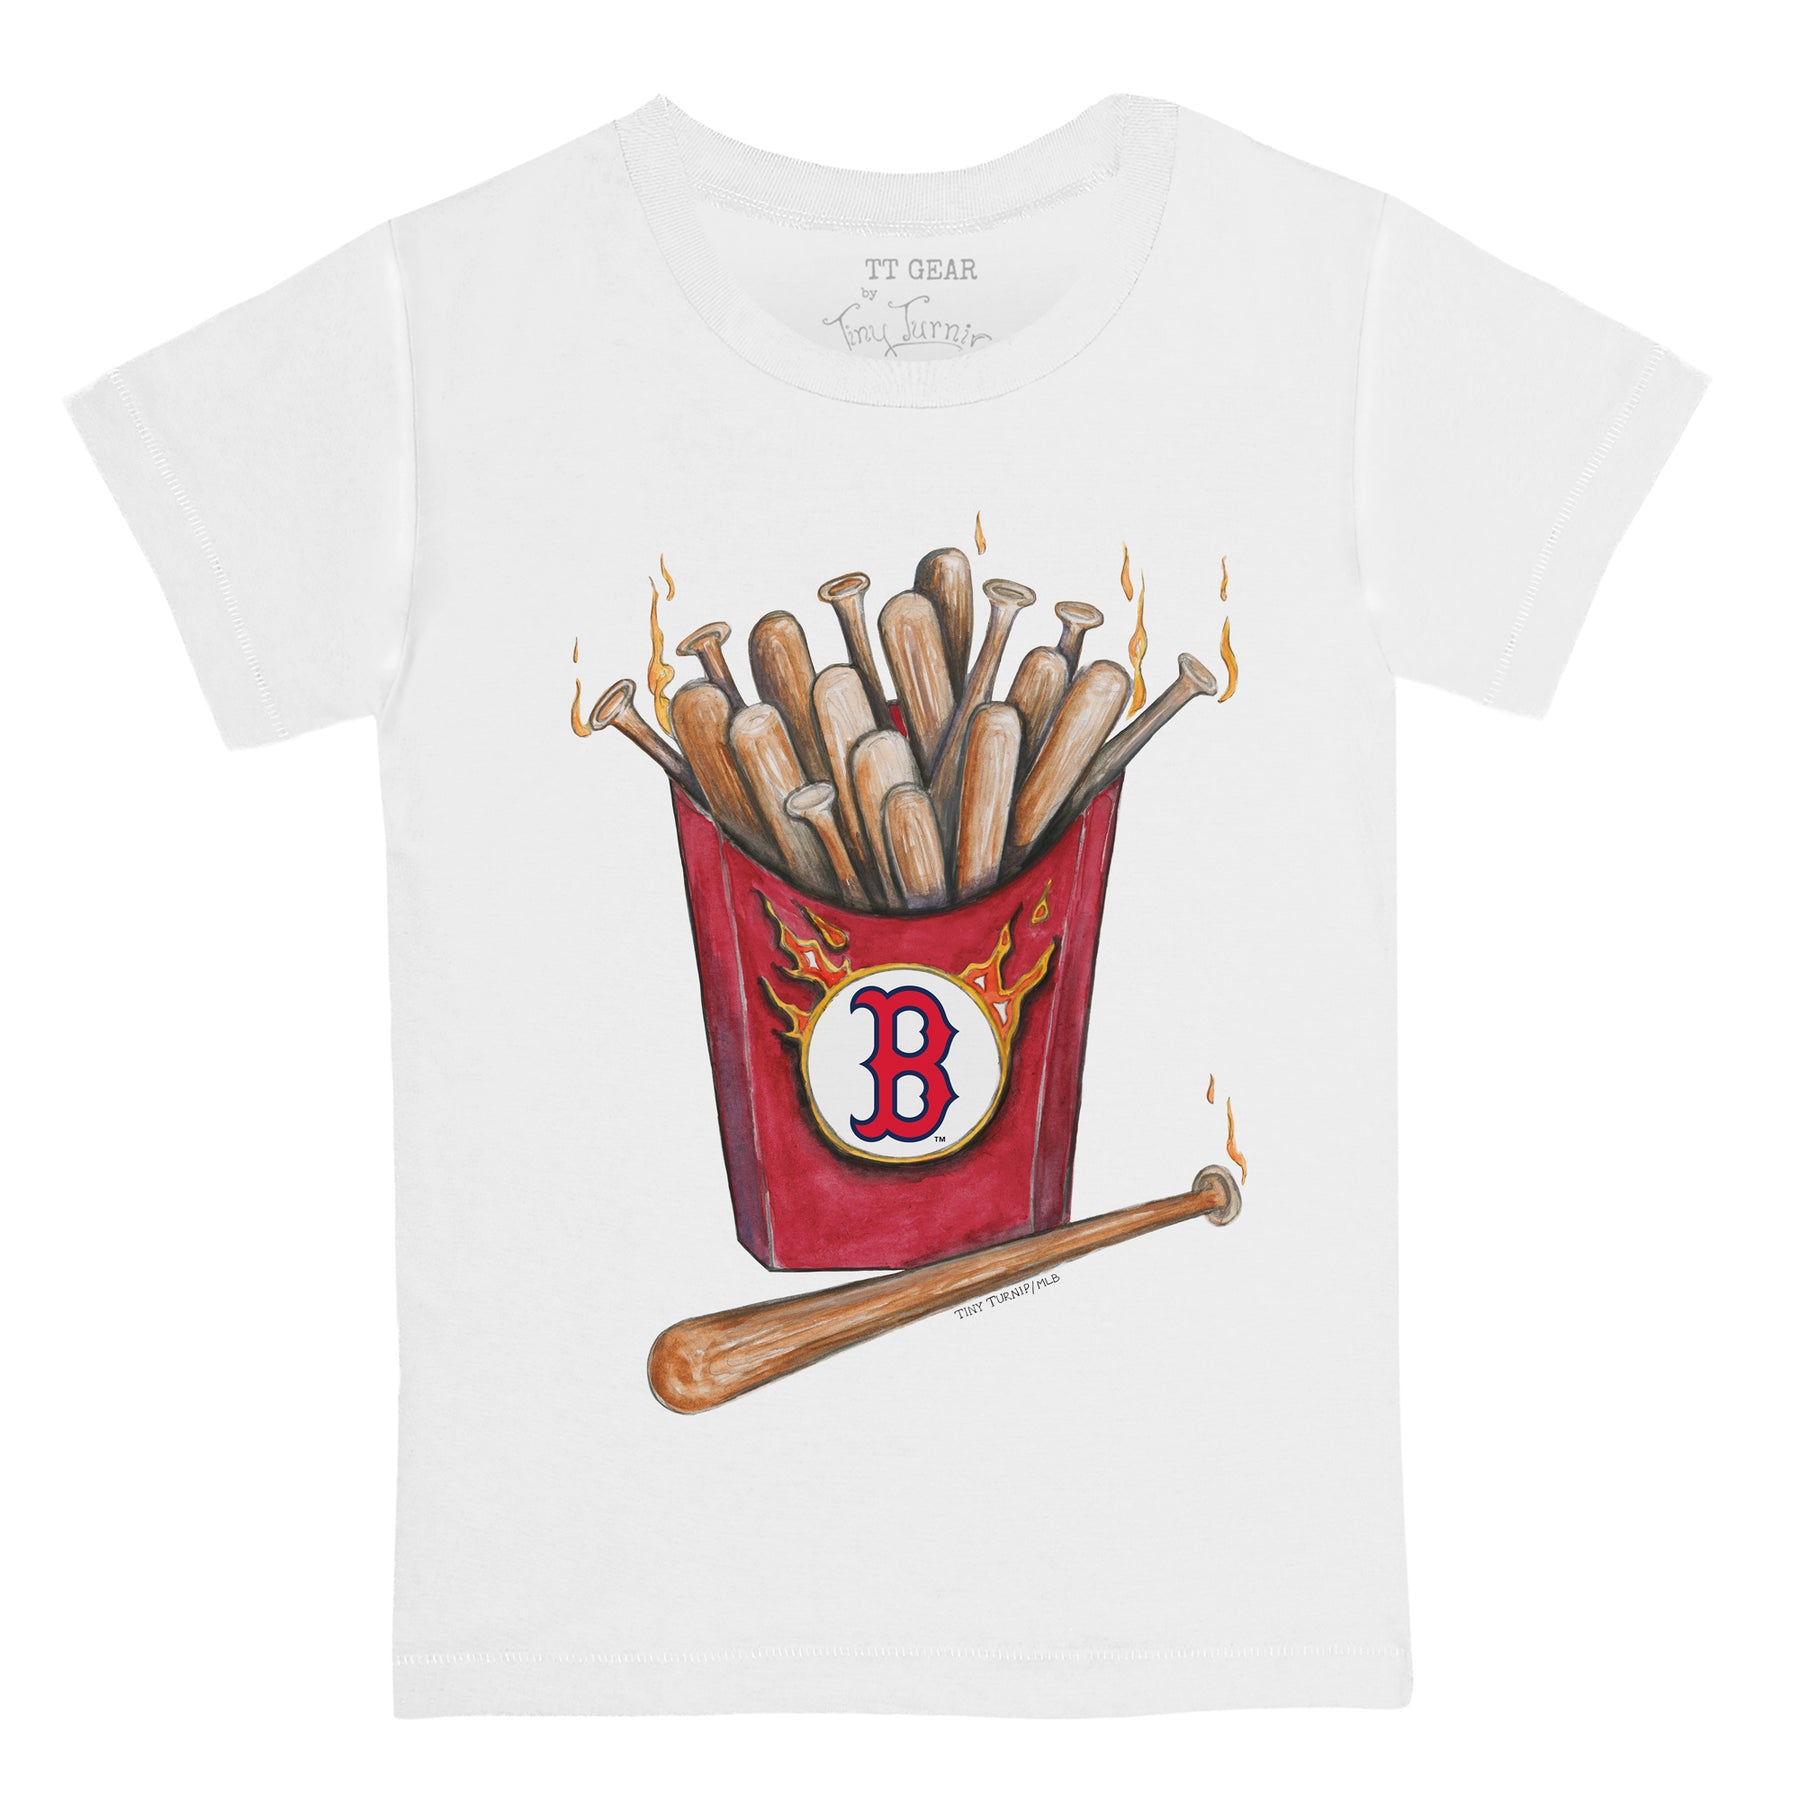 Boston Red Sox Hot Bats Tee Shirt 24M / White